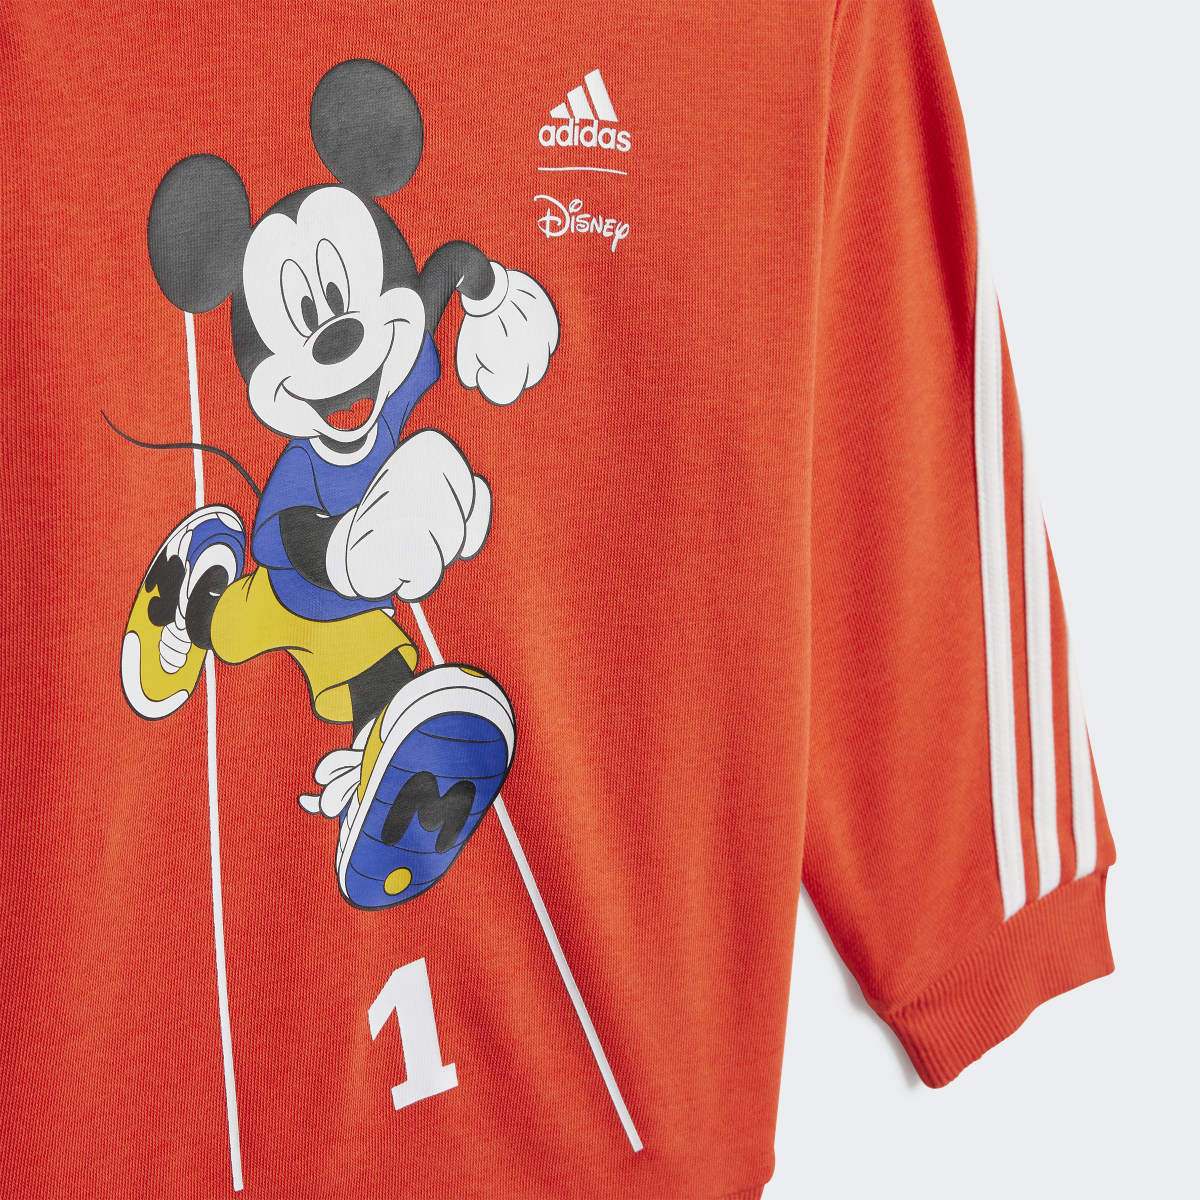 Adidas x Disney Mickey Mouse Jogger. 7